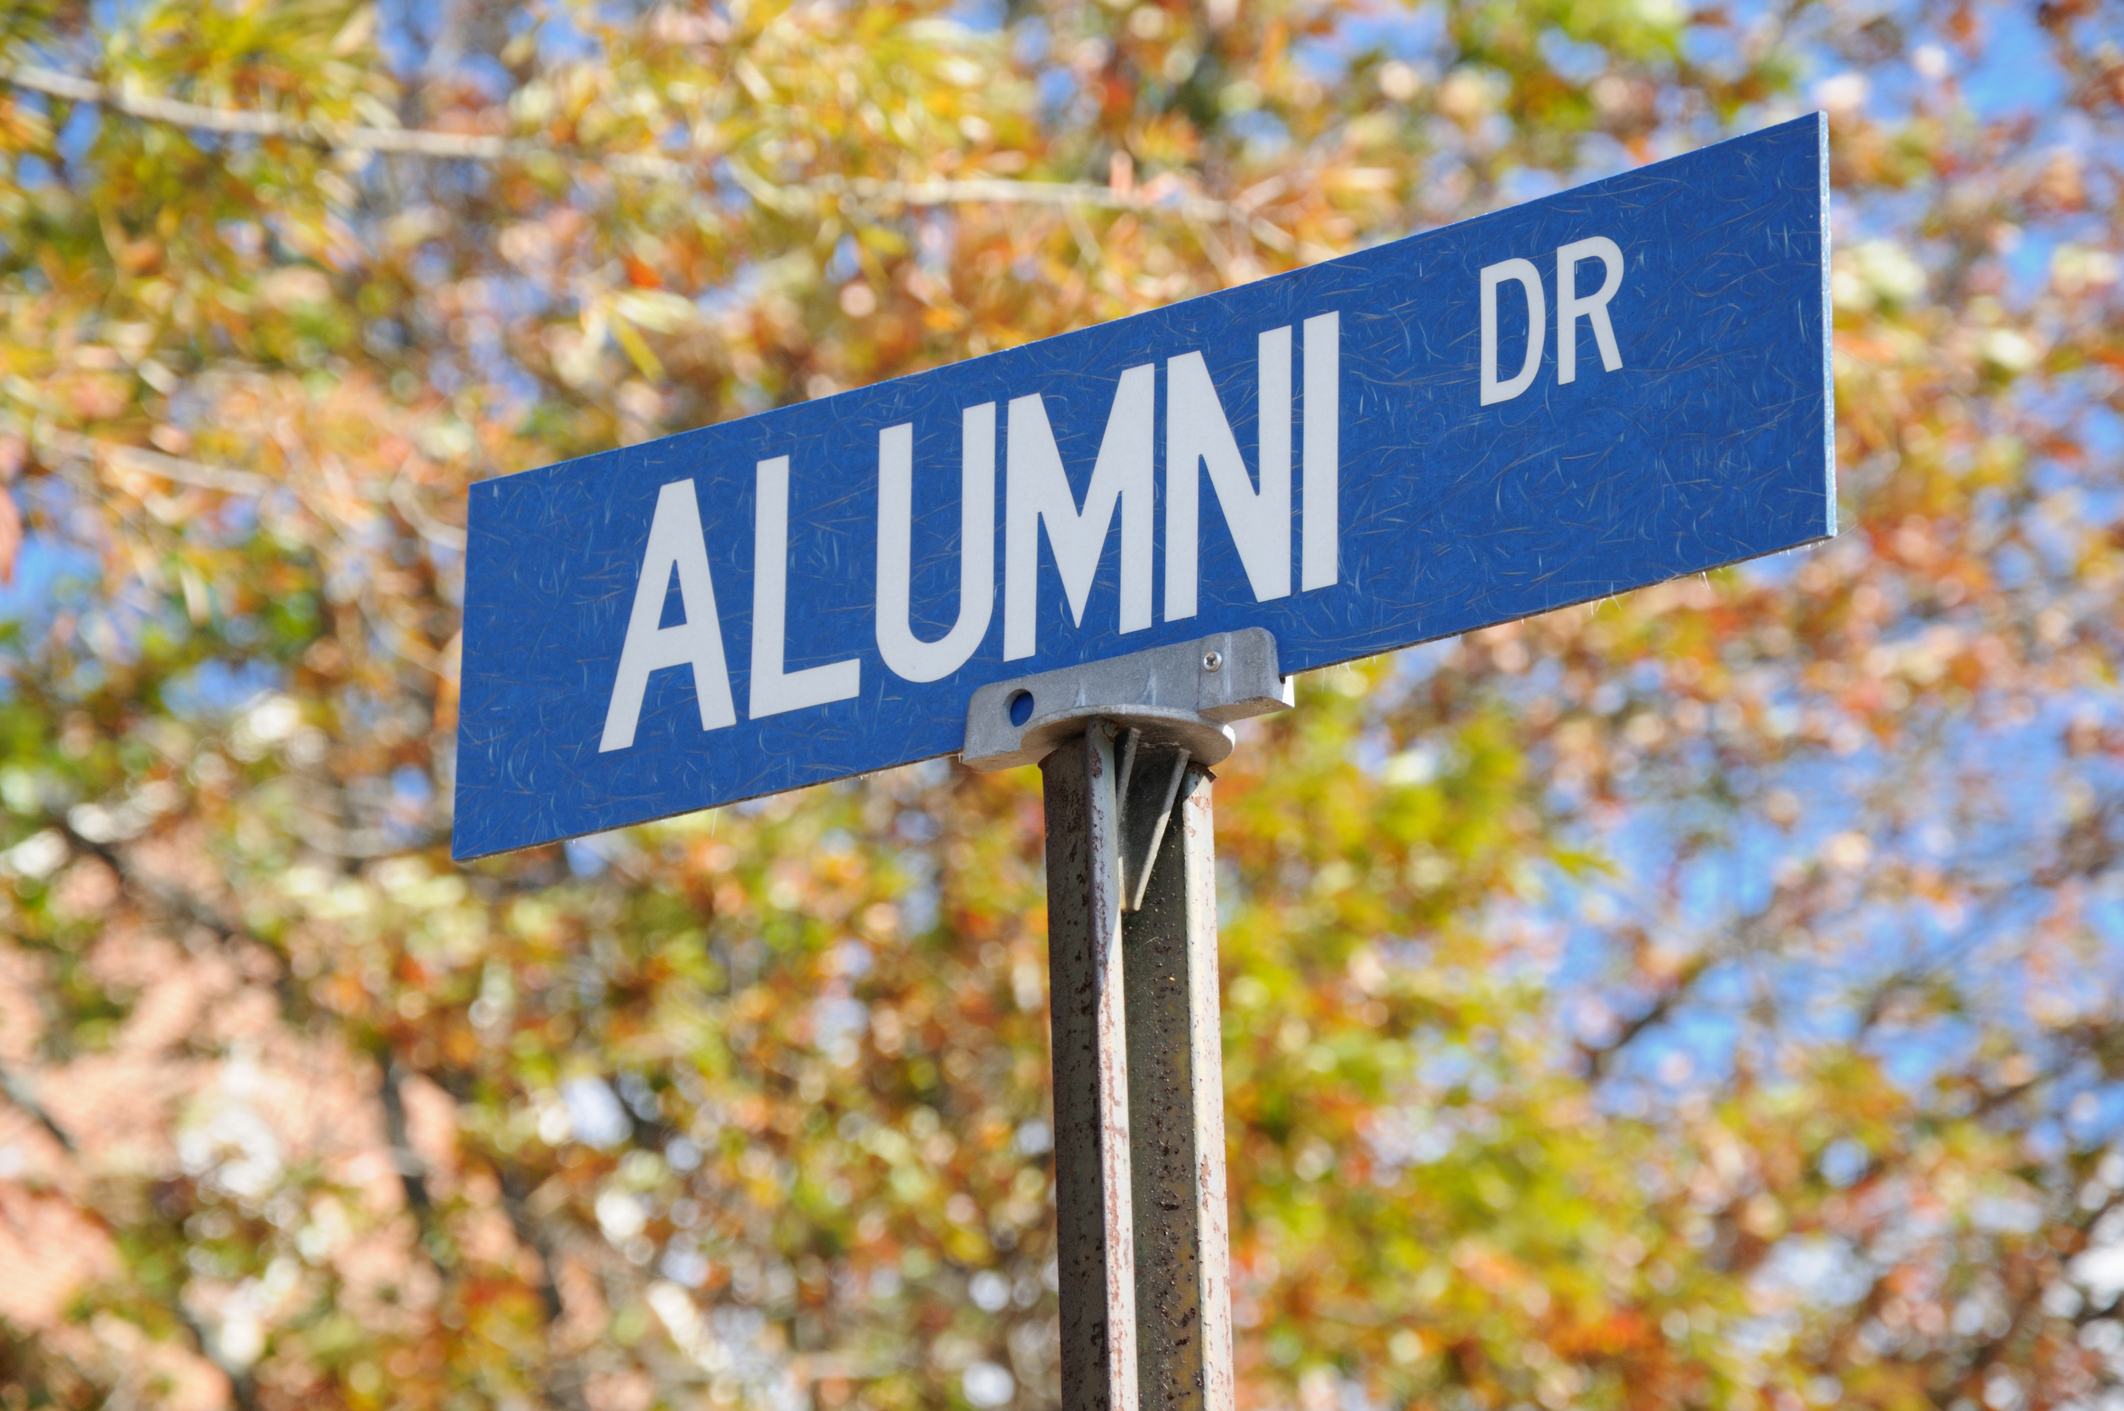 Alumni drive sign at university